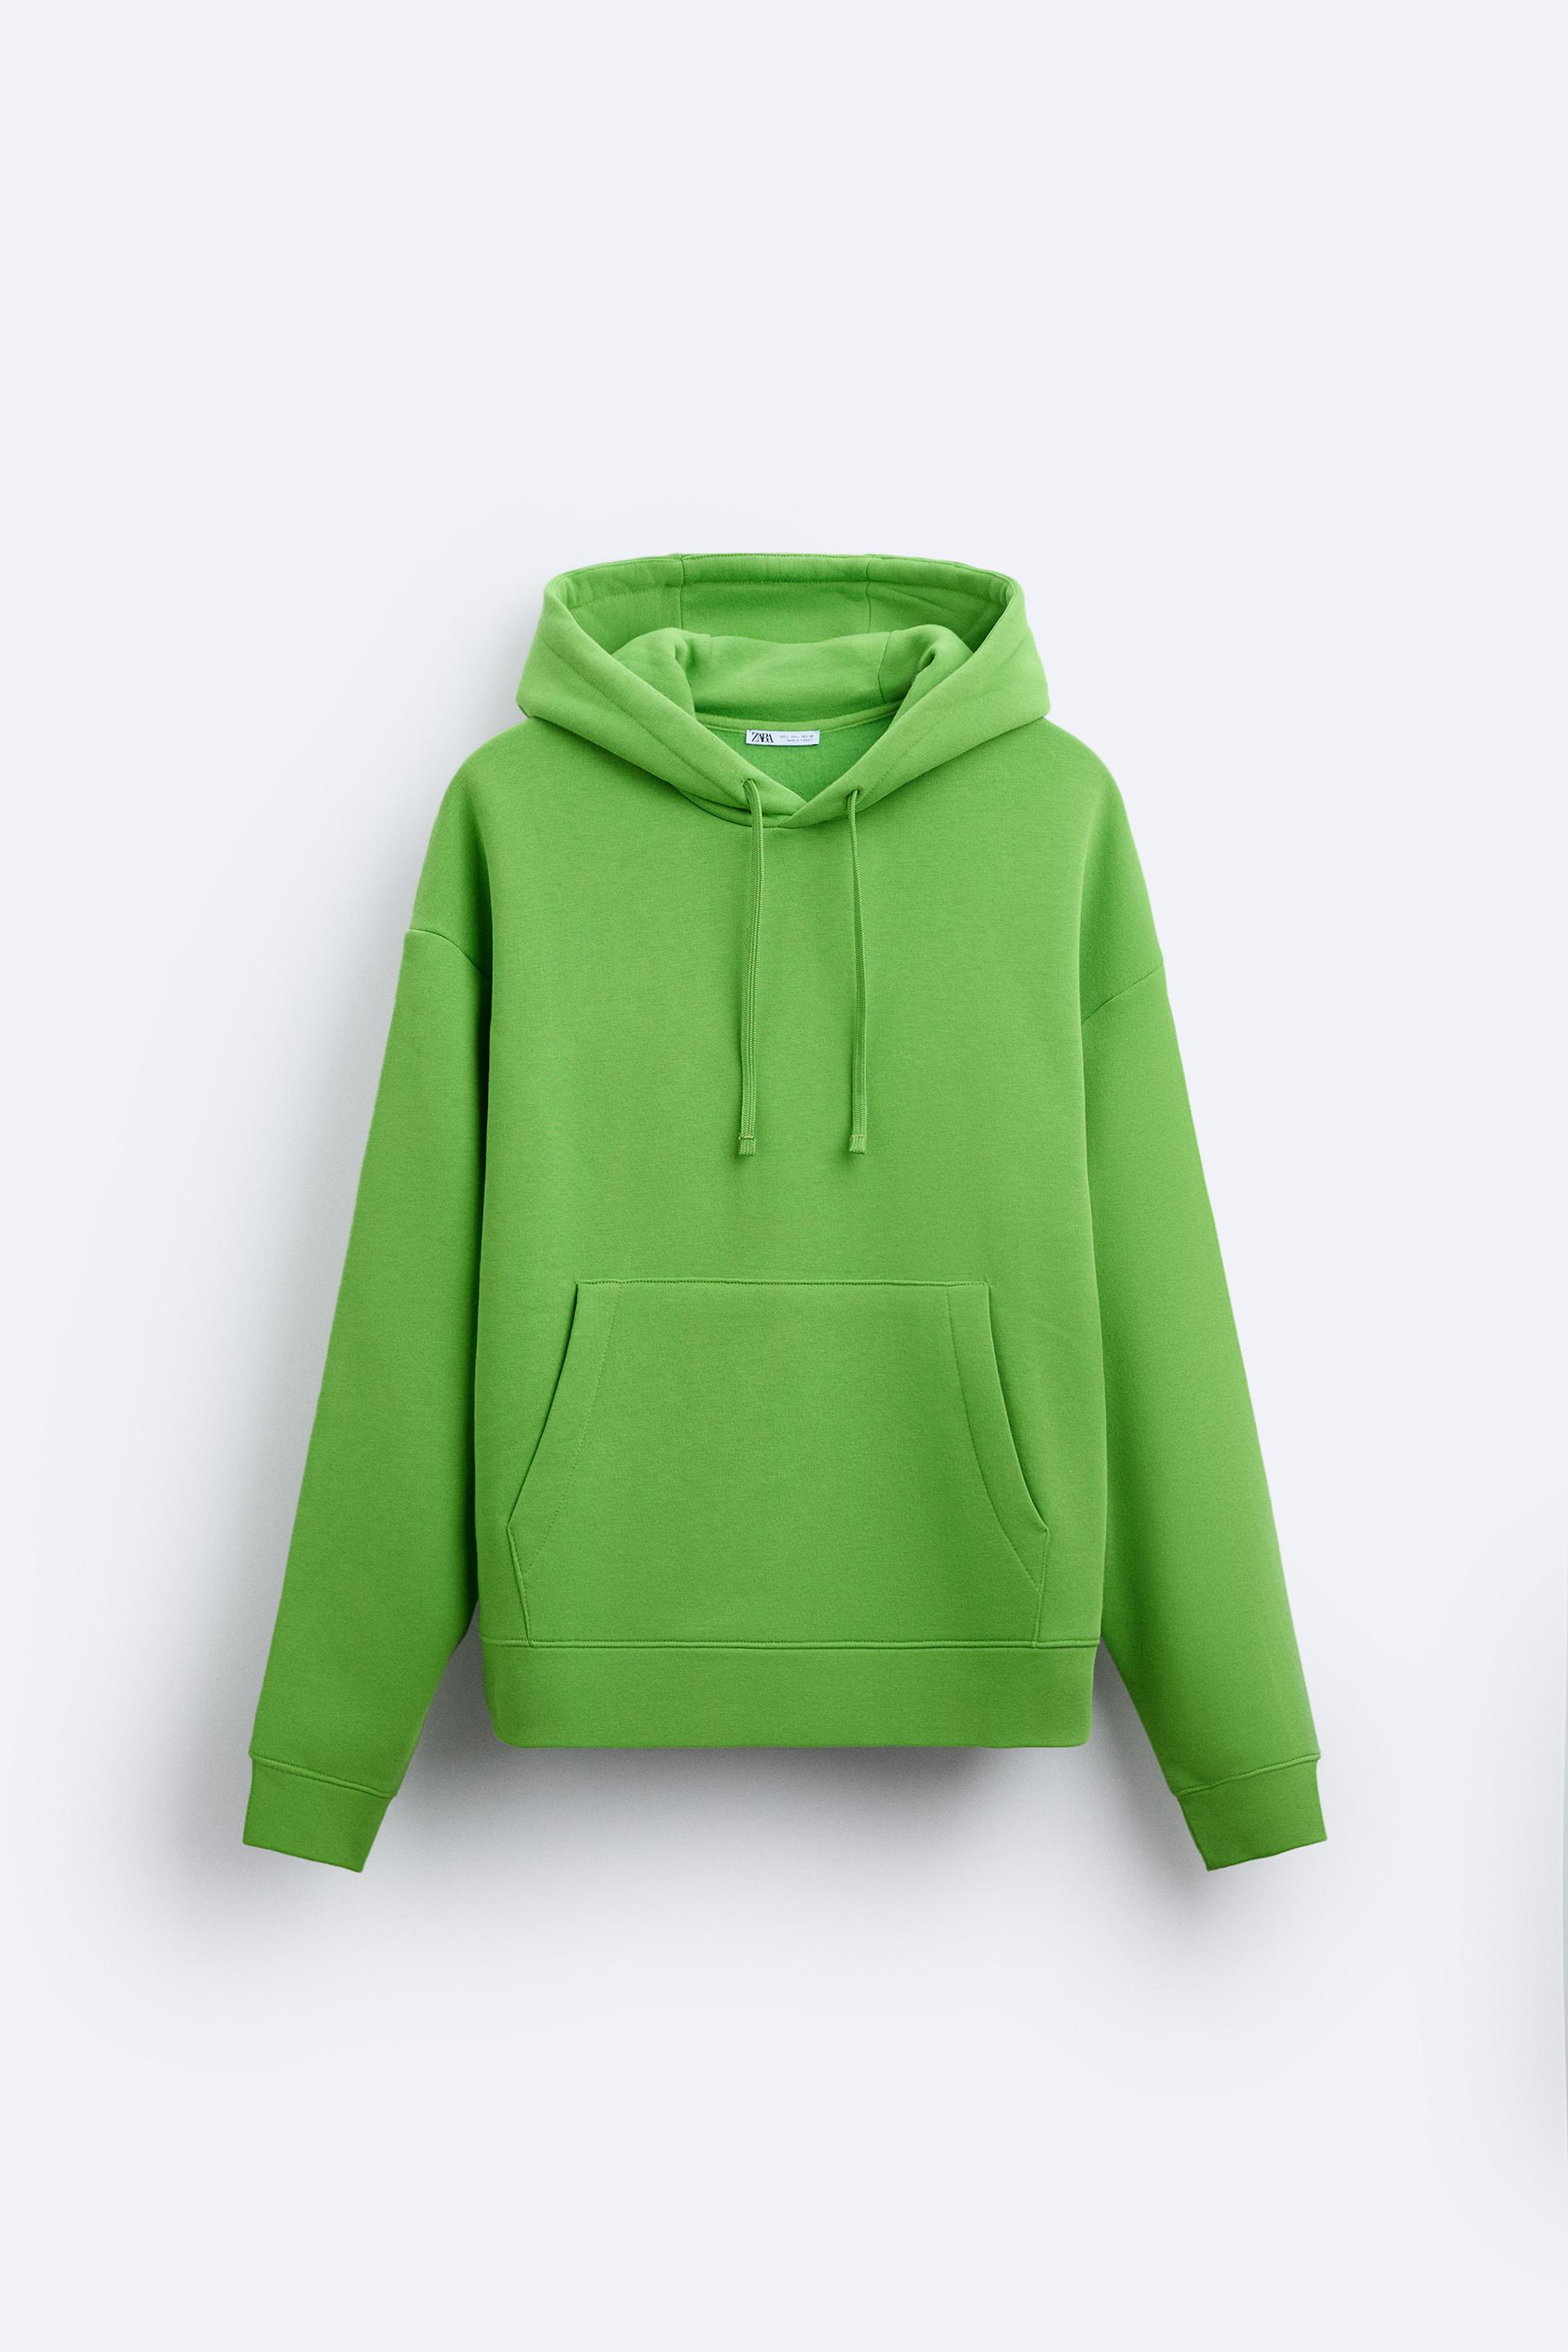 Zara Womens Sweatshirt Small Green Pullover Hoodie Pocket Lightweight  Distressed 